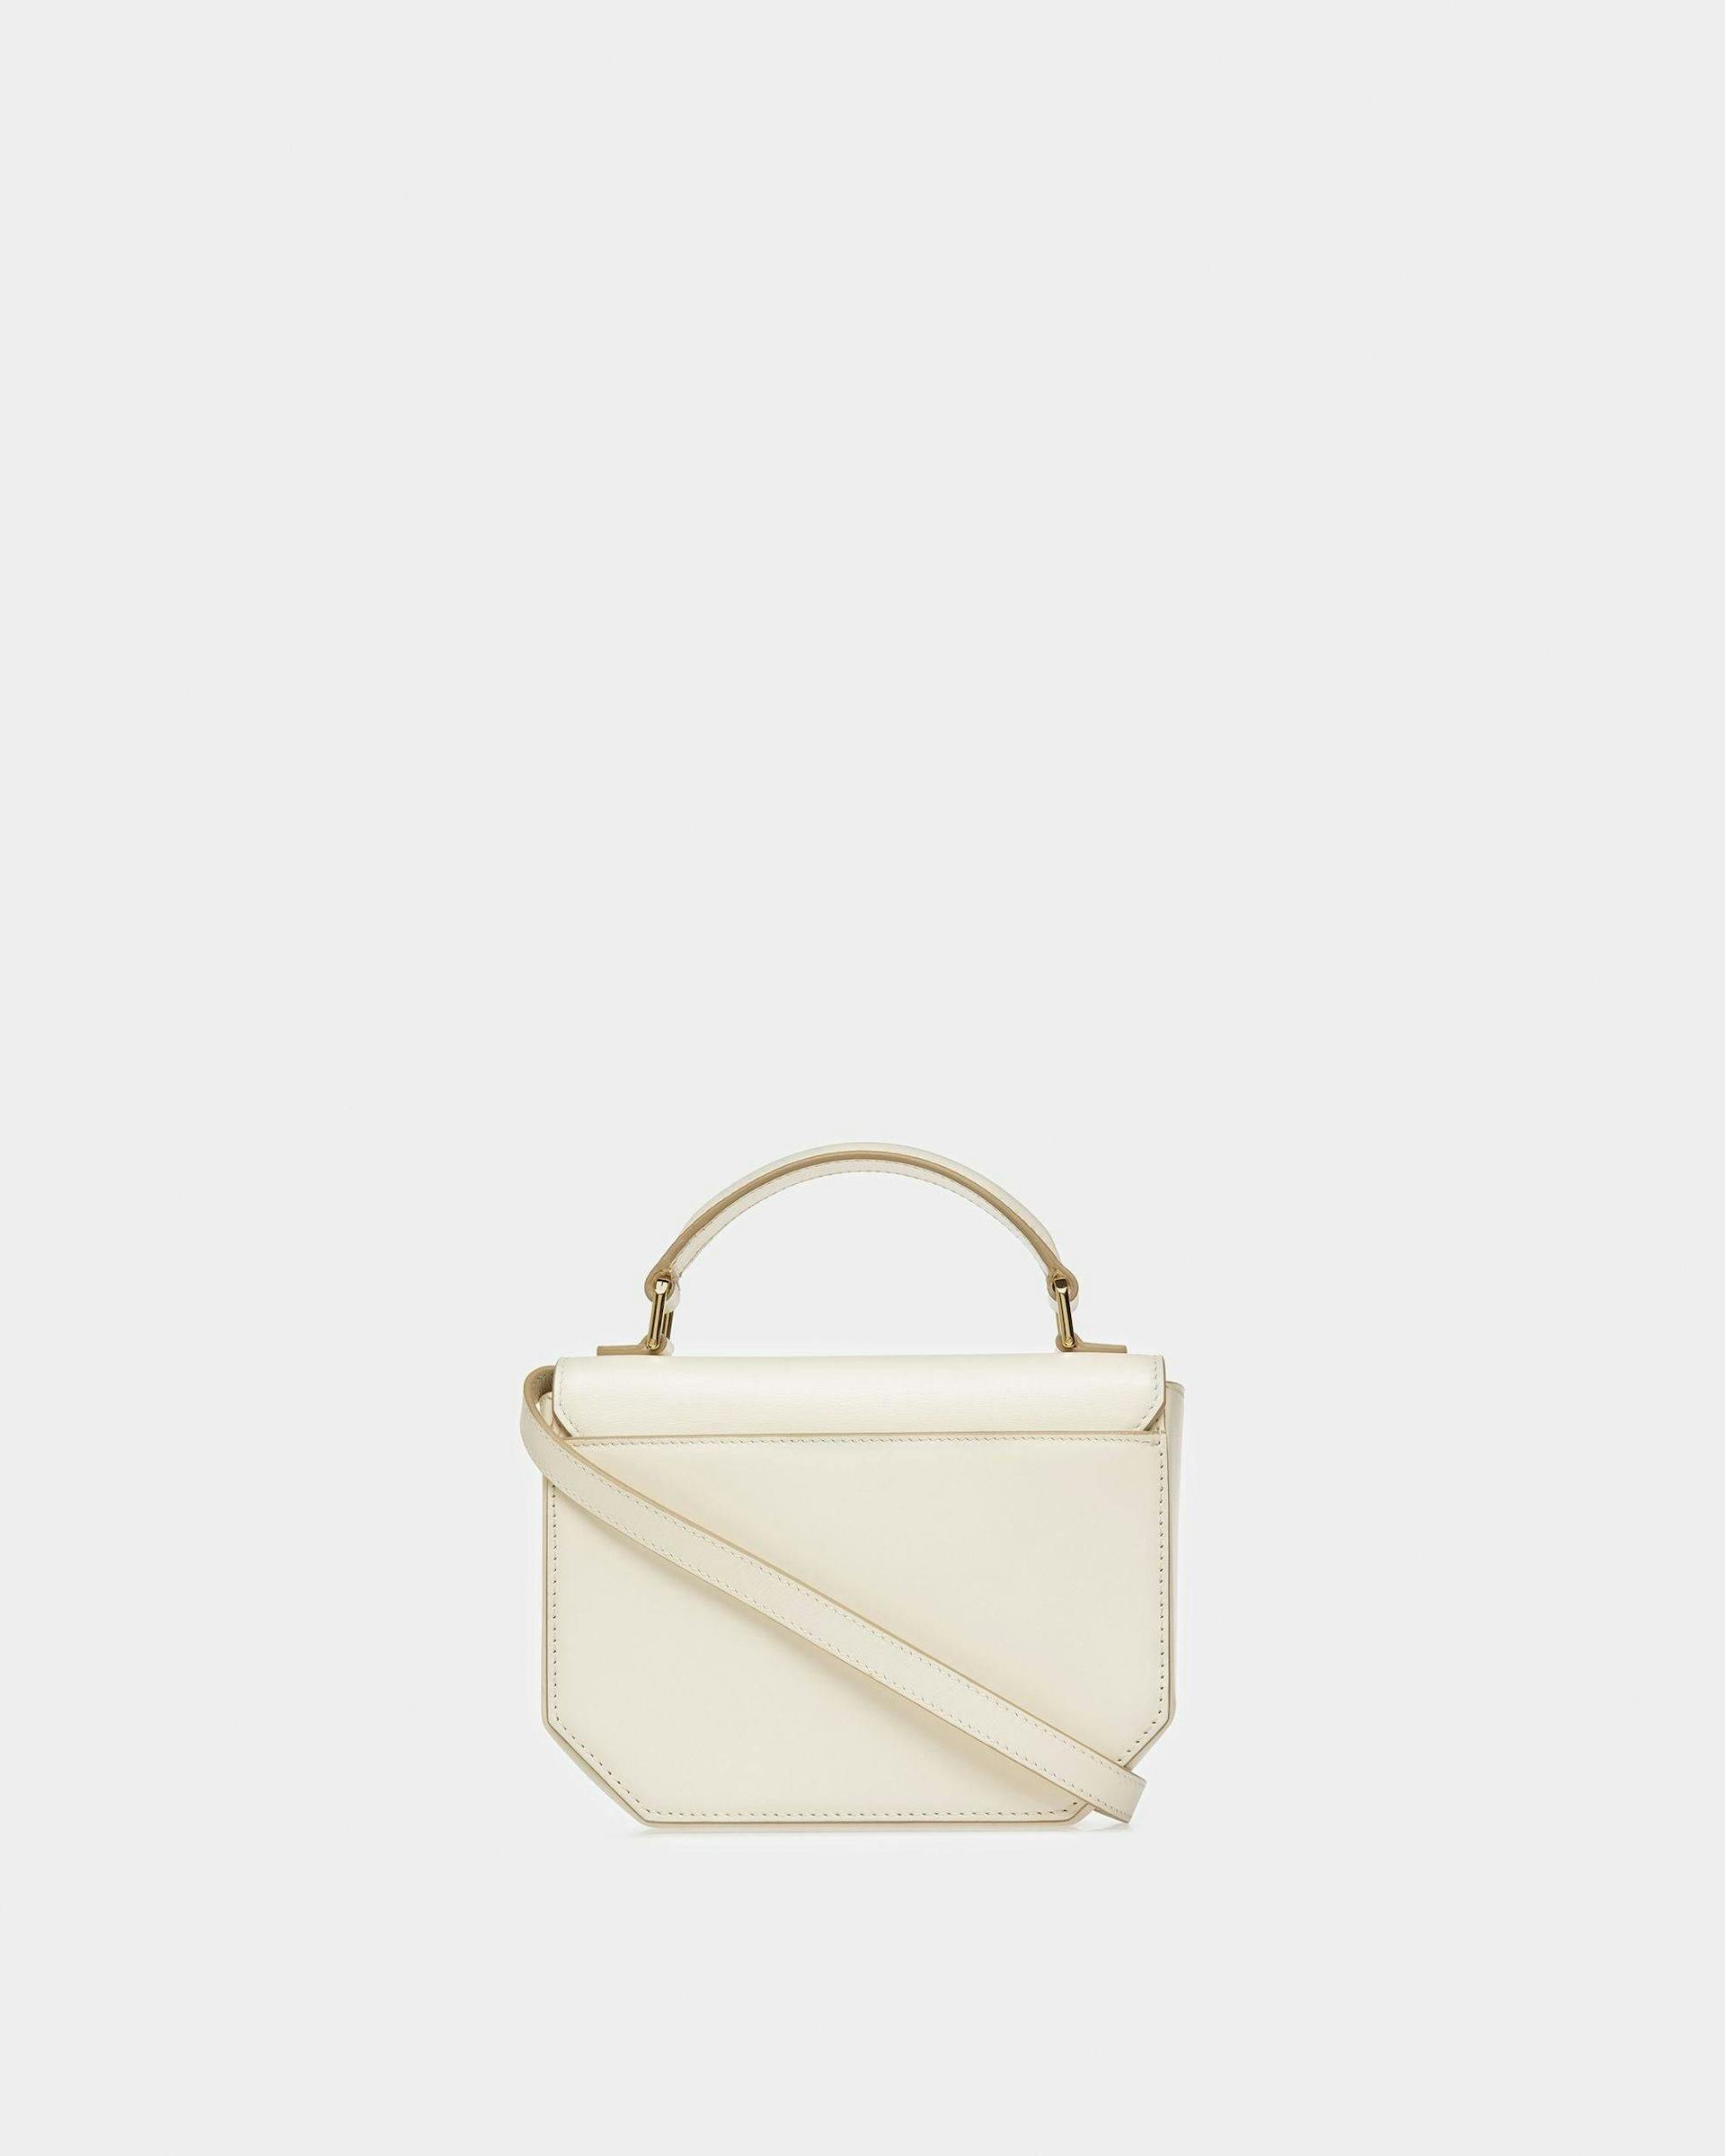 Emblem | Women's Mini Bag | Bone Leather | Bally